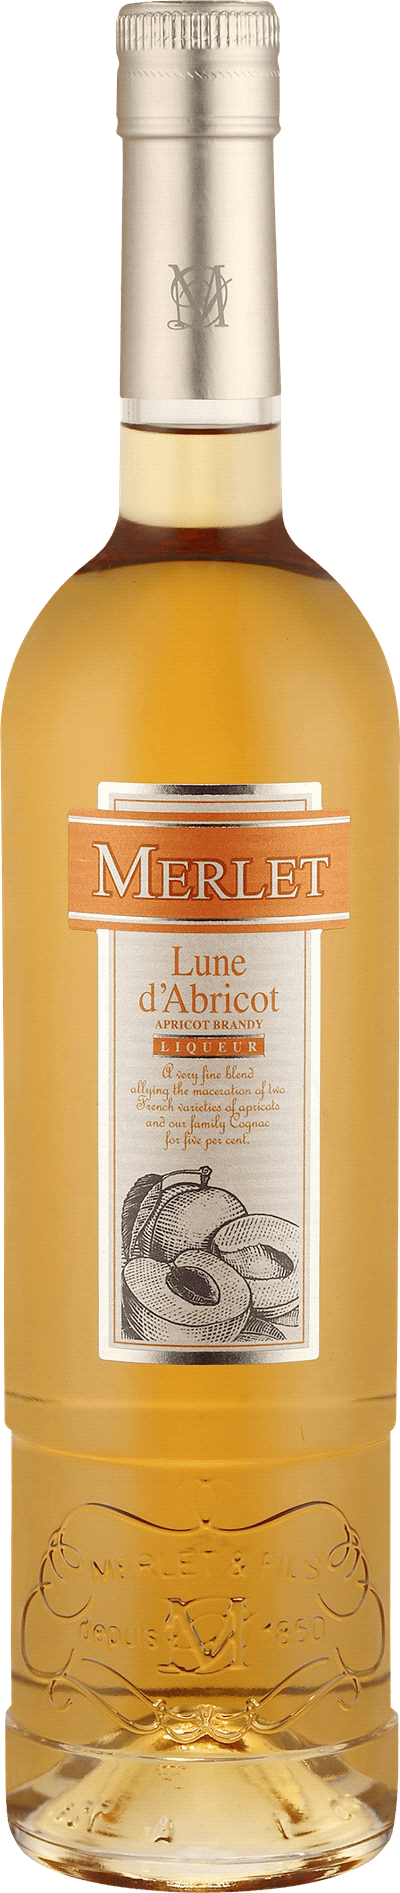 Merlet Apricot Brandy